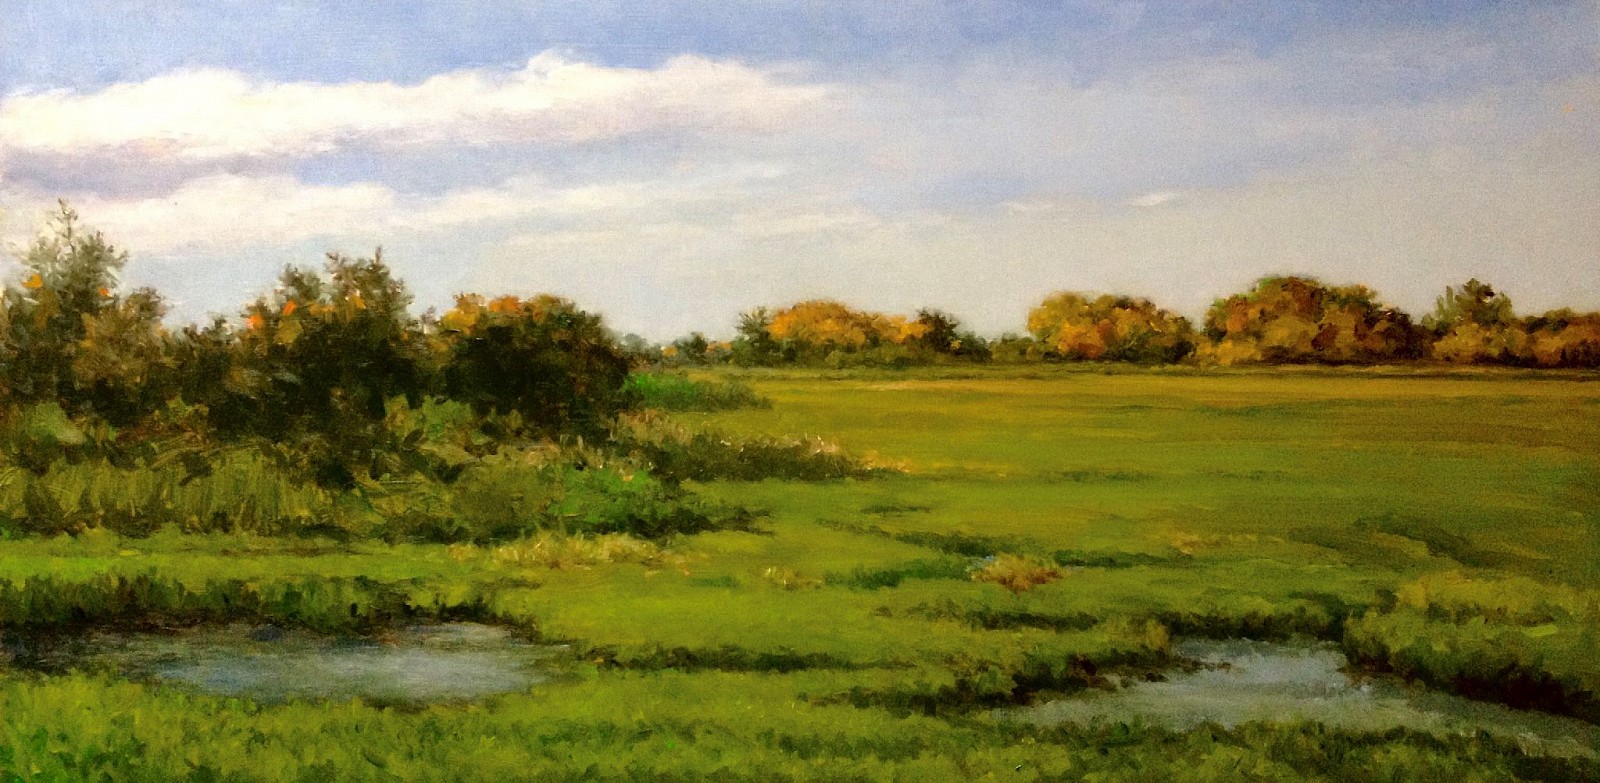 David Peikon, Marsh Grass, 2017
oil on panel, 12 x 24 in. (30.5 x 61 cm)
DP200125